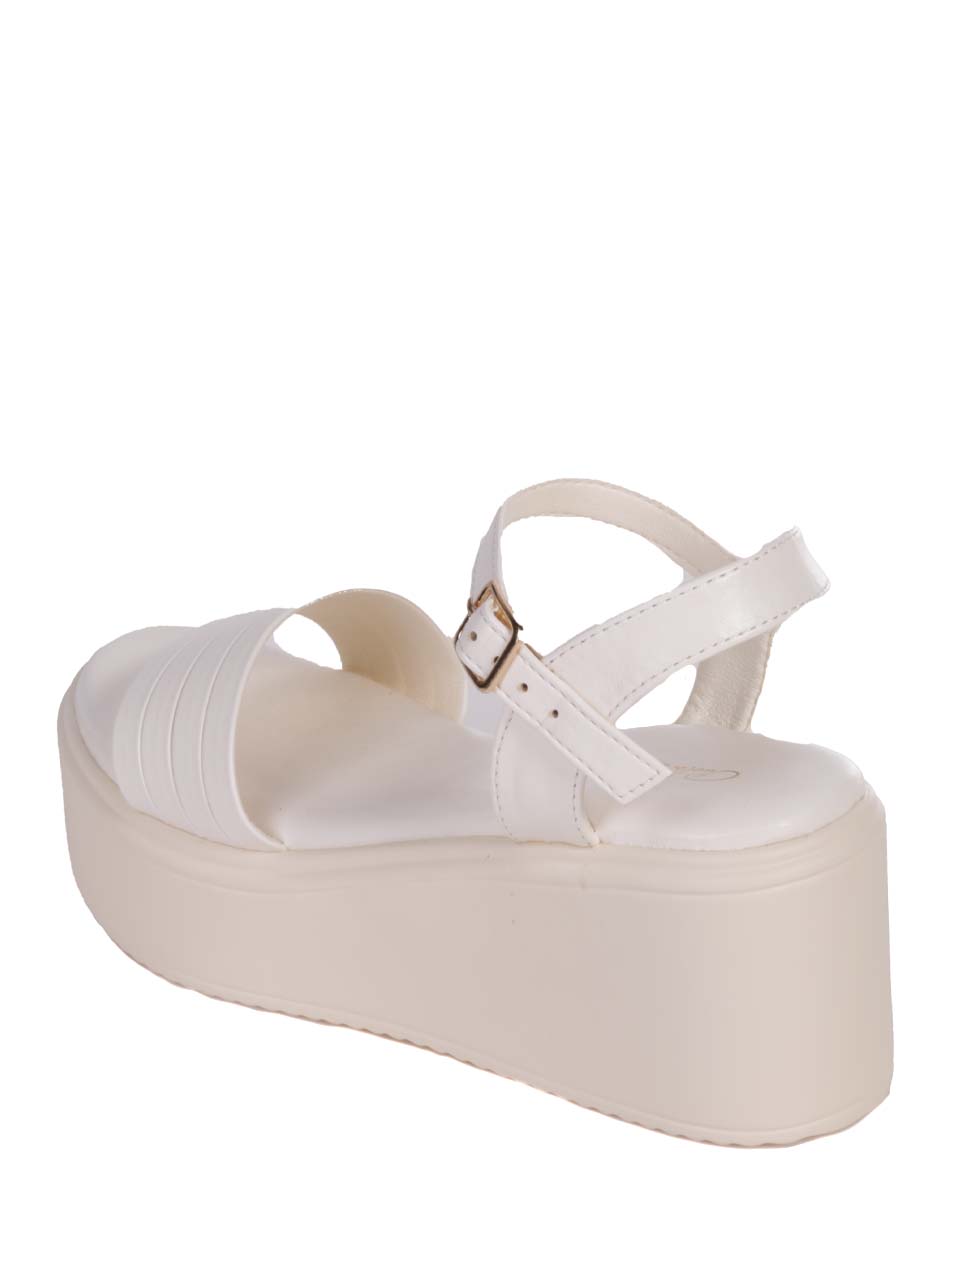 Ежедневни дамски сандали на платформа в бяло 4H-24320 off white